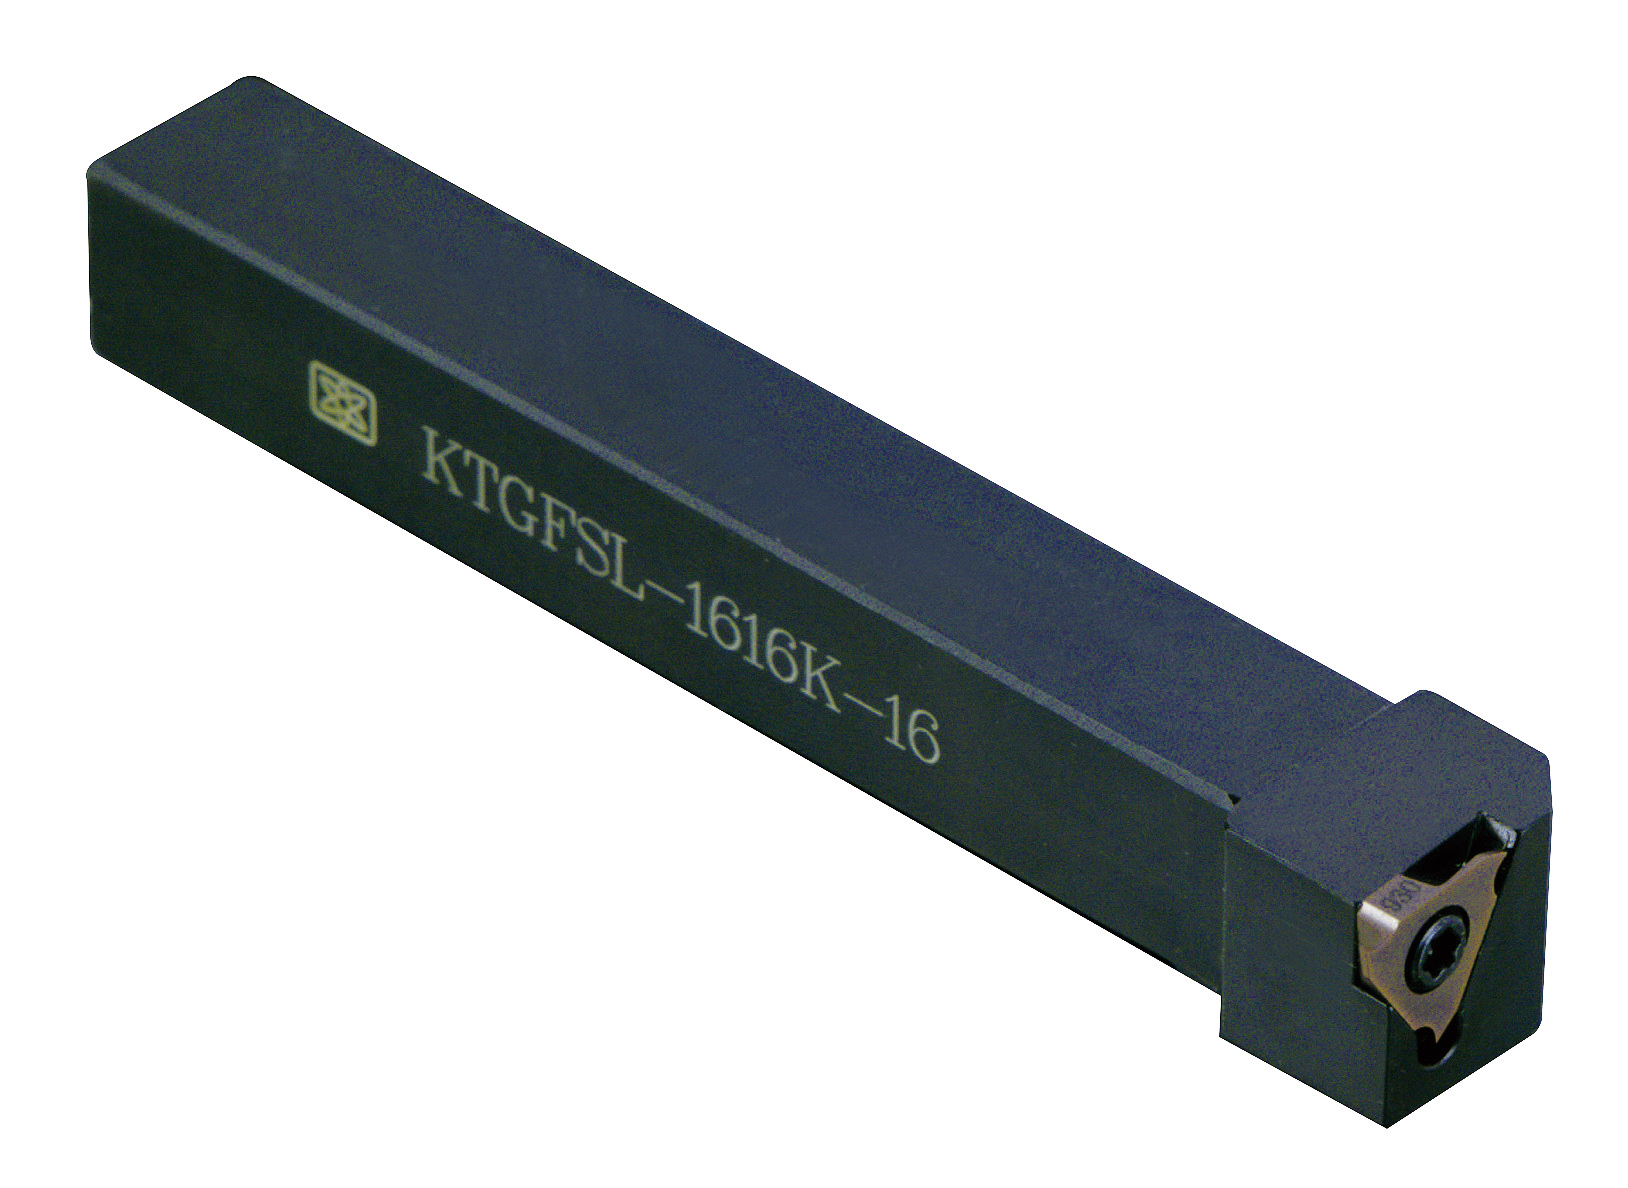 KTGFSL (TGF32R) External Grooving Tool Holder